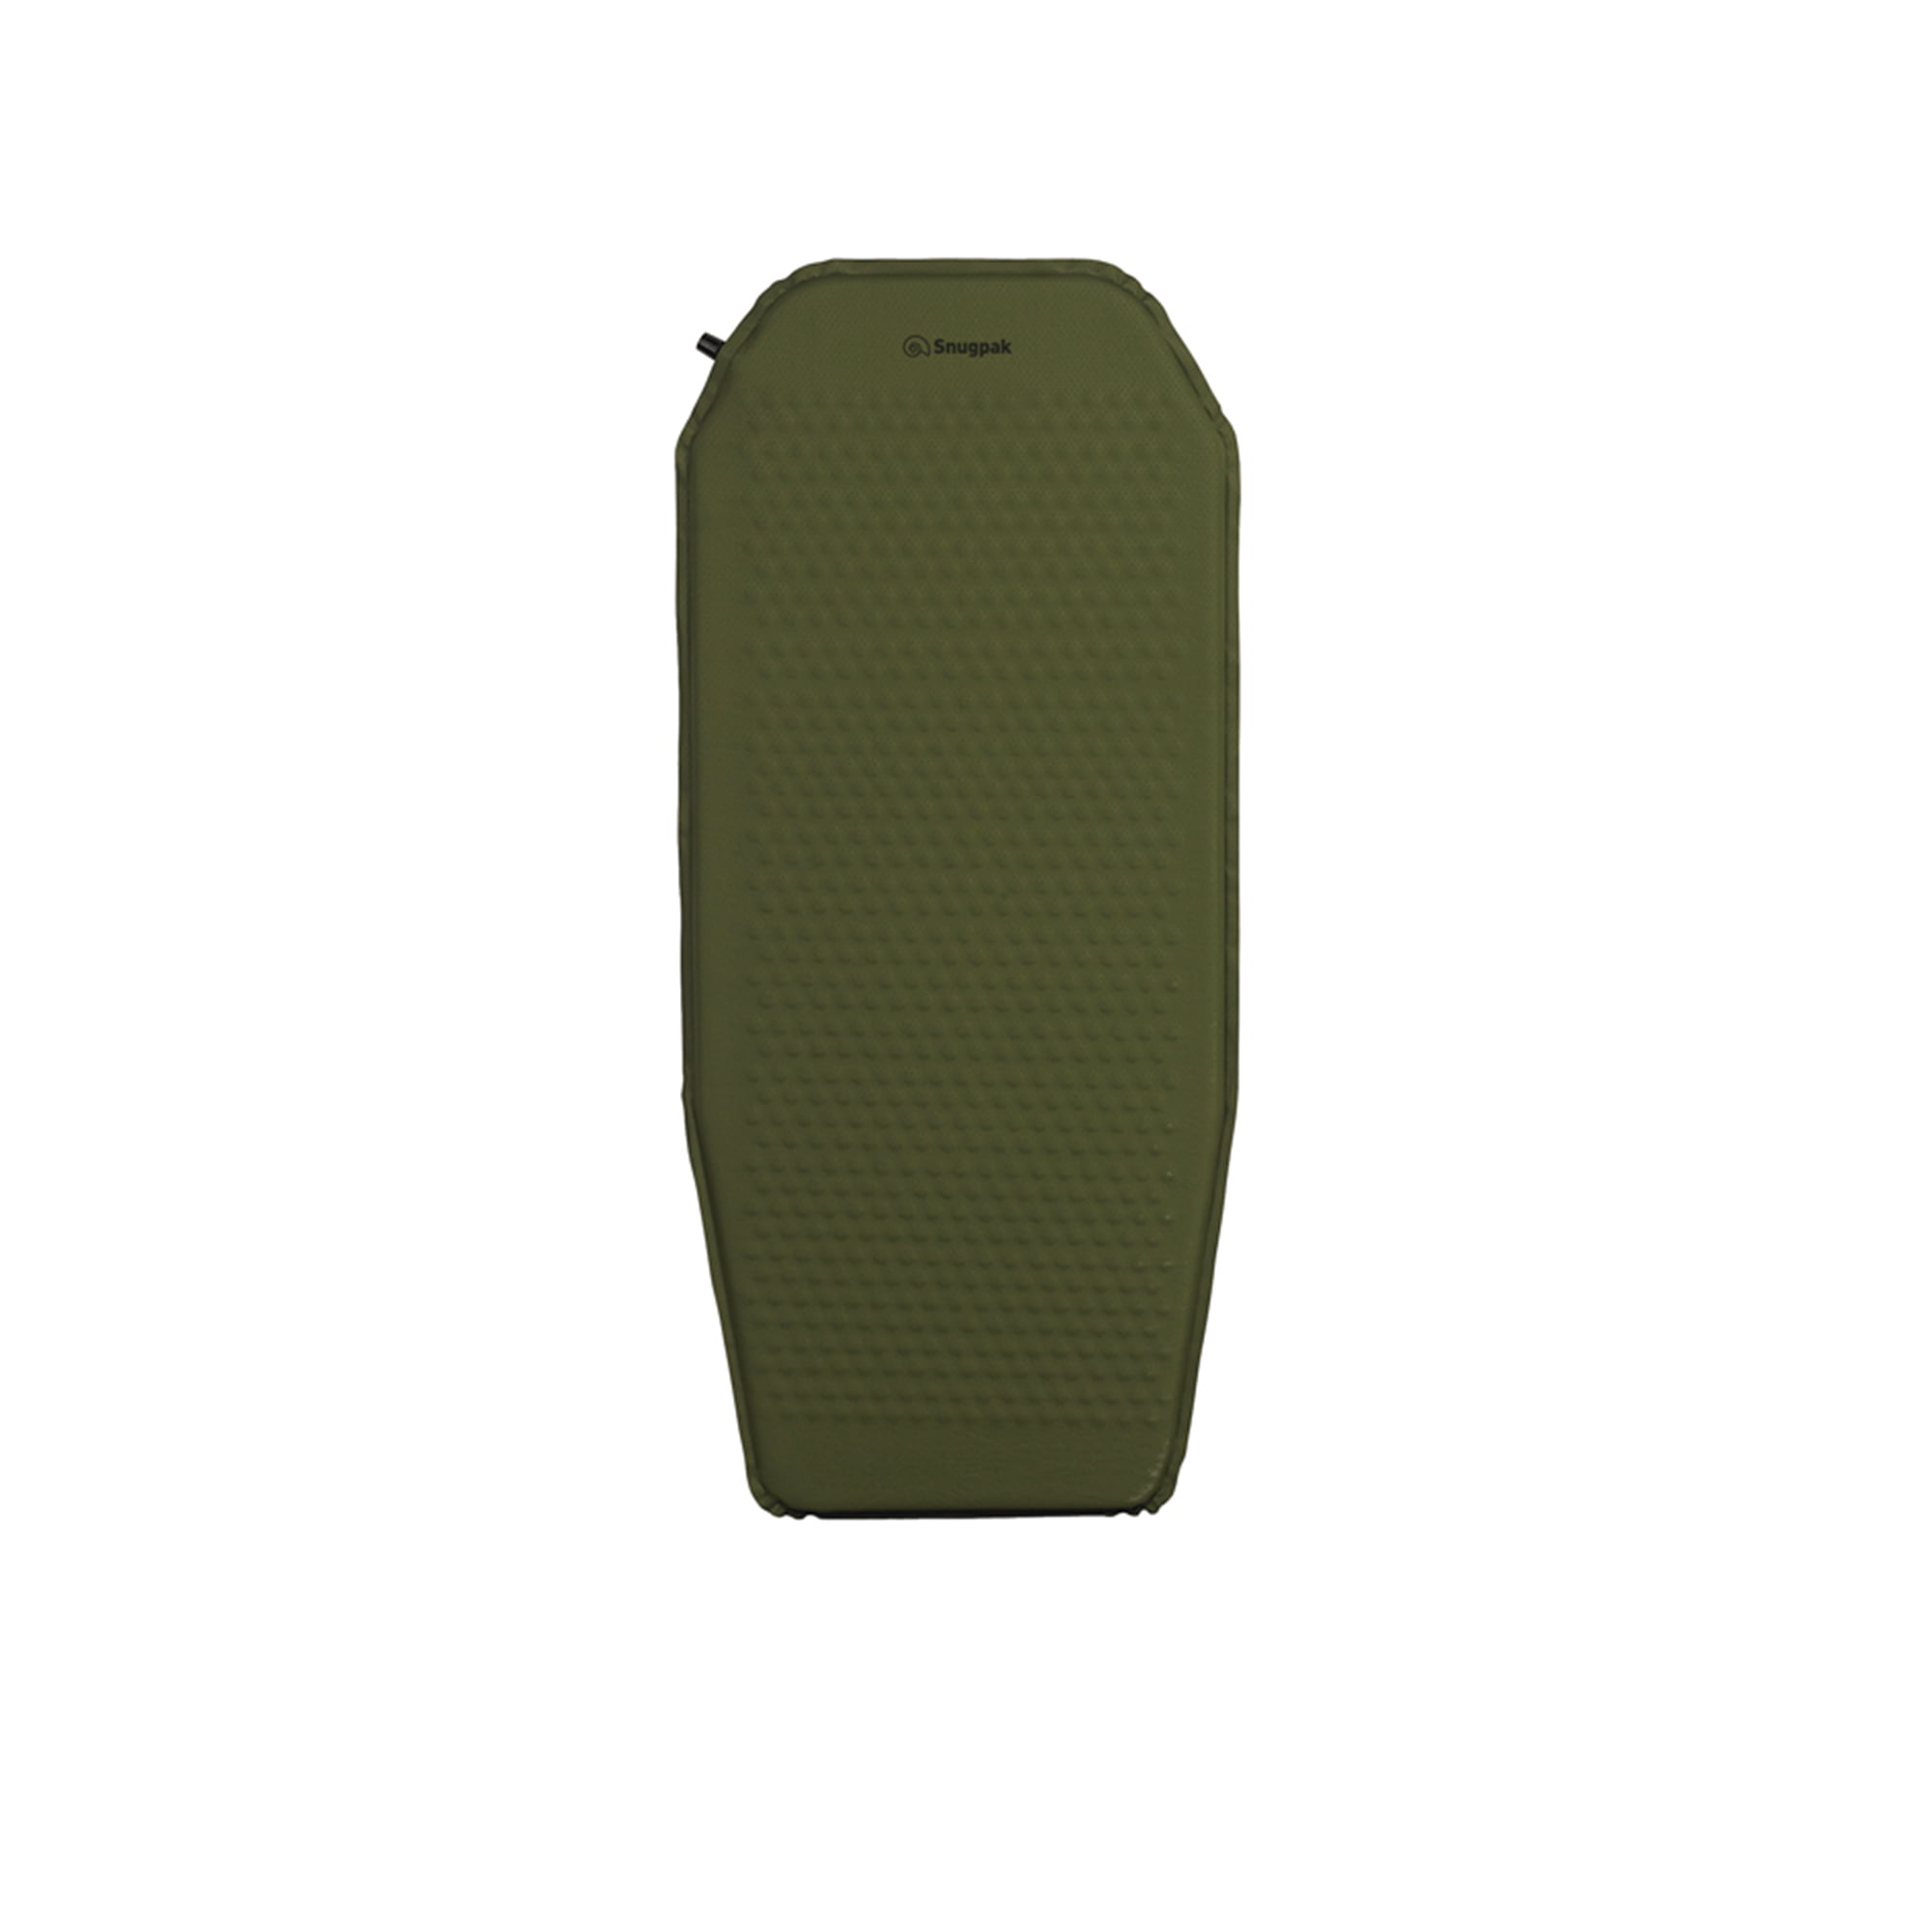 Snugpak Self-inflating Maxi Mat Sleeping Bag Camping Lightweight Mattress Pad 